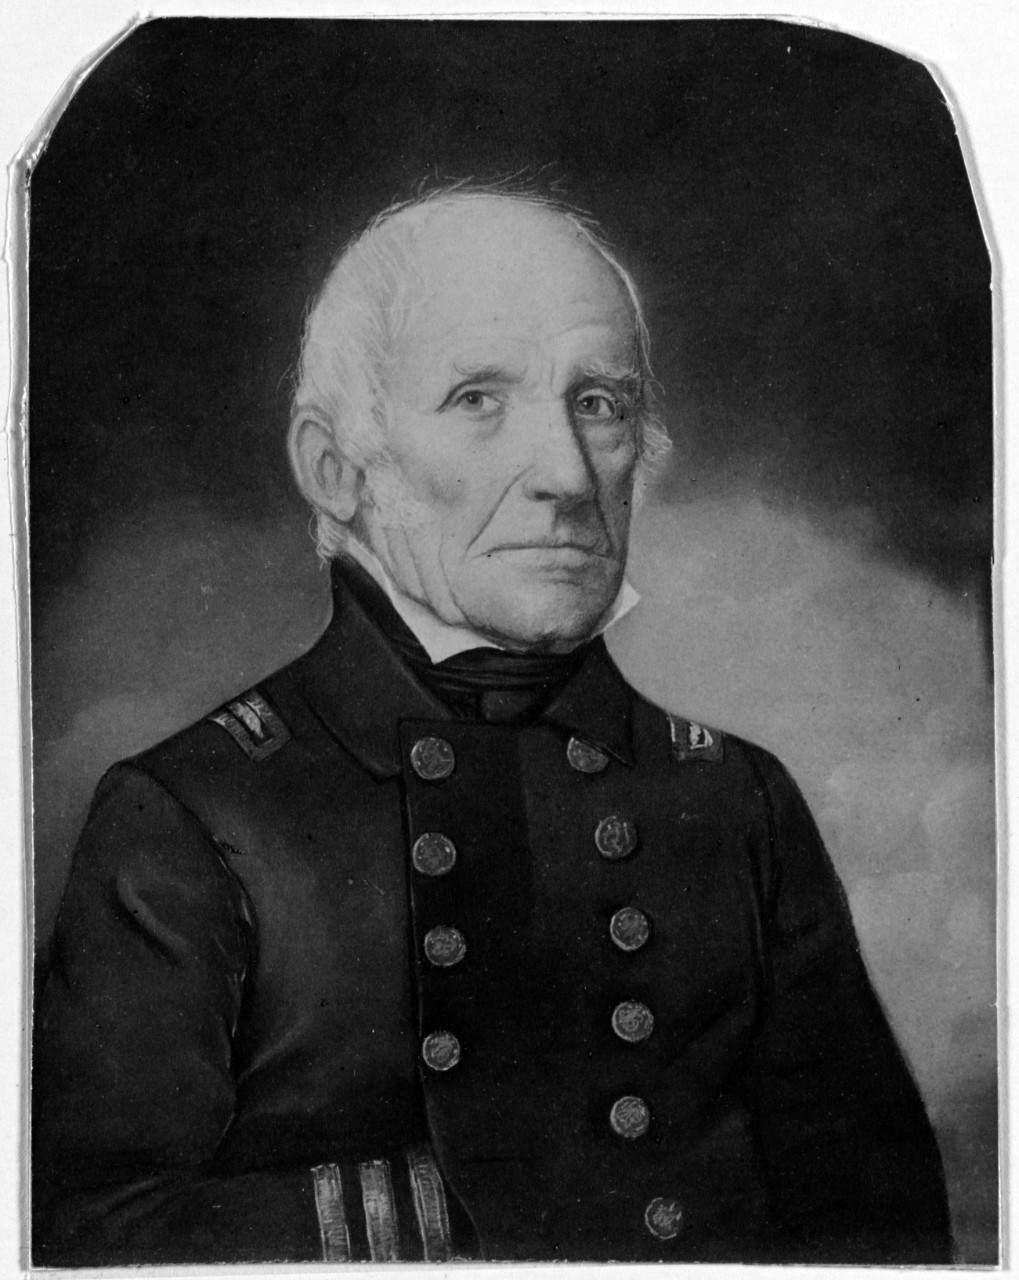 Captain John Percival, USN